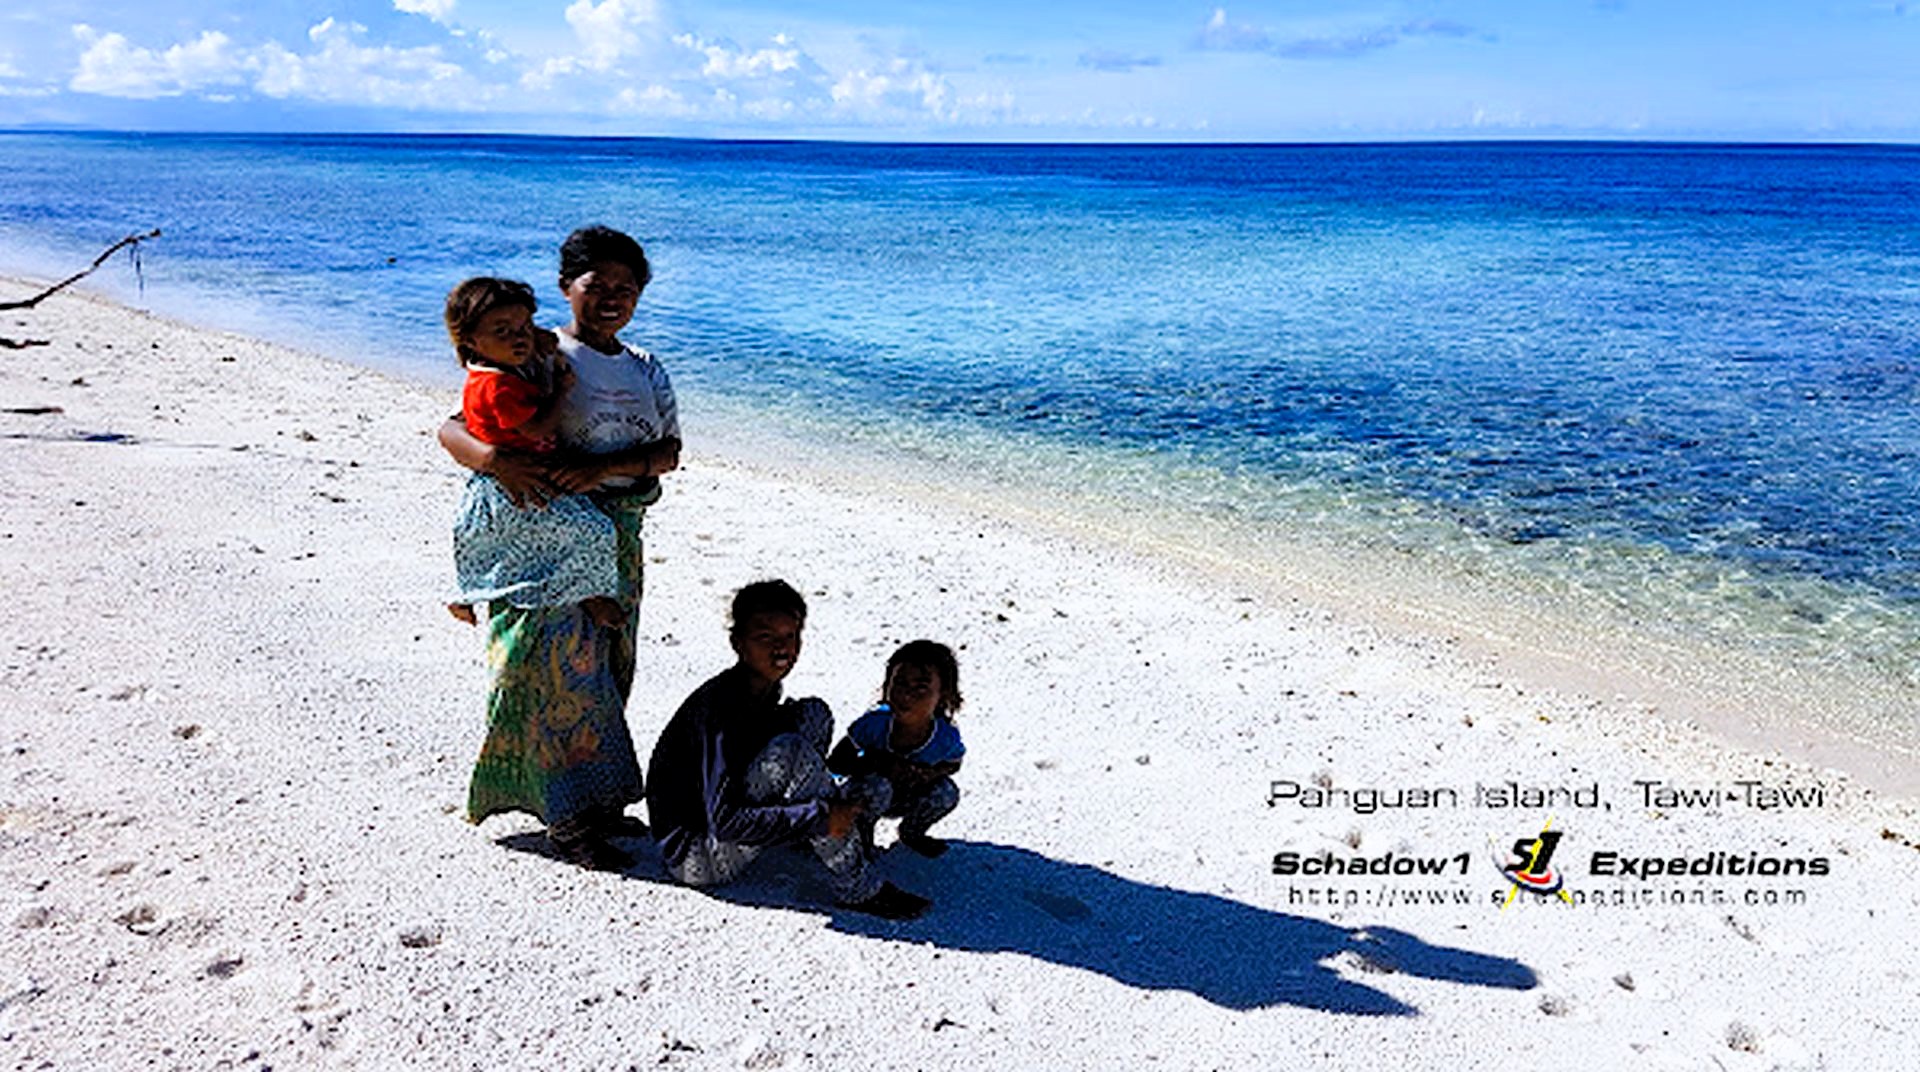 PHILIPPINEN MAGAZIN - REISEZIELE/AUSFLÜGE - AUSFLUGSZIEL - Panguan Island in Tawi-Tawi